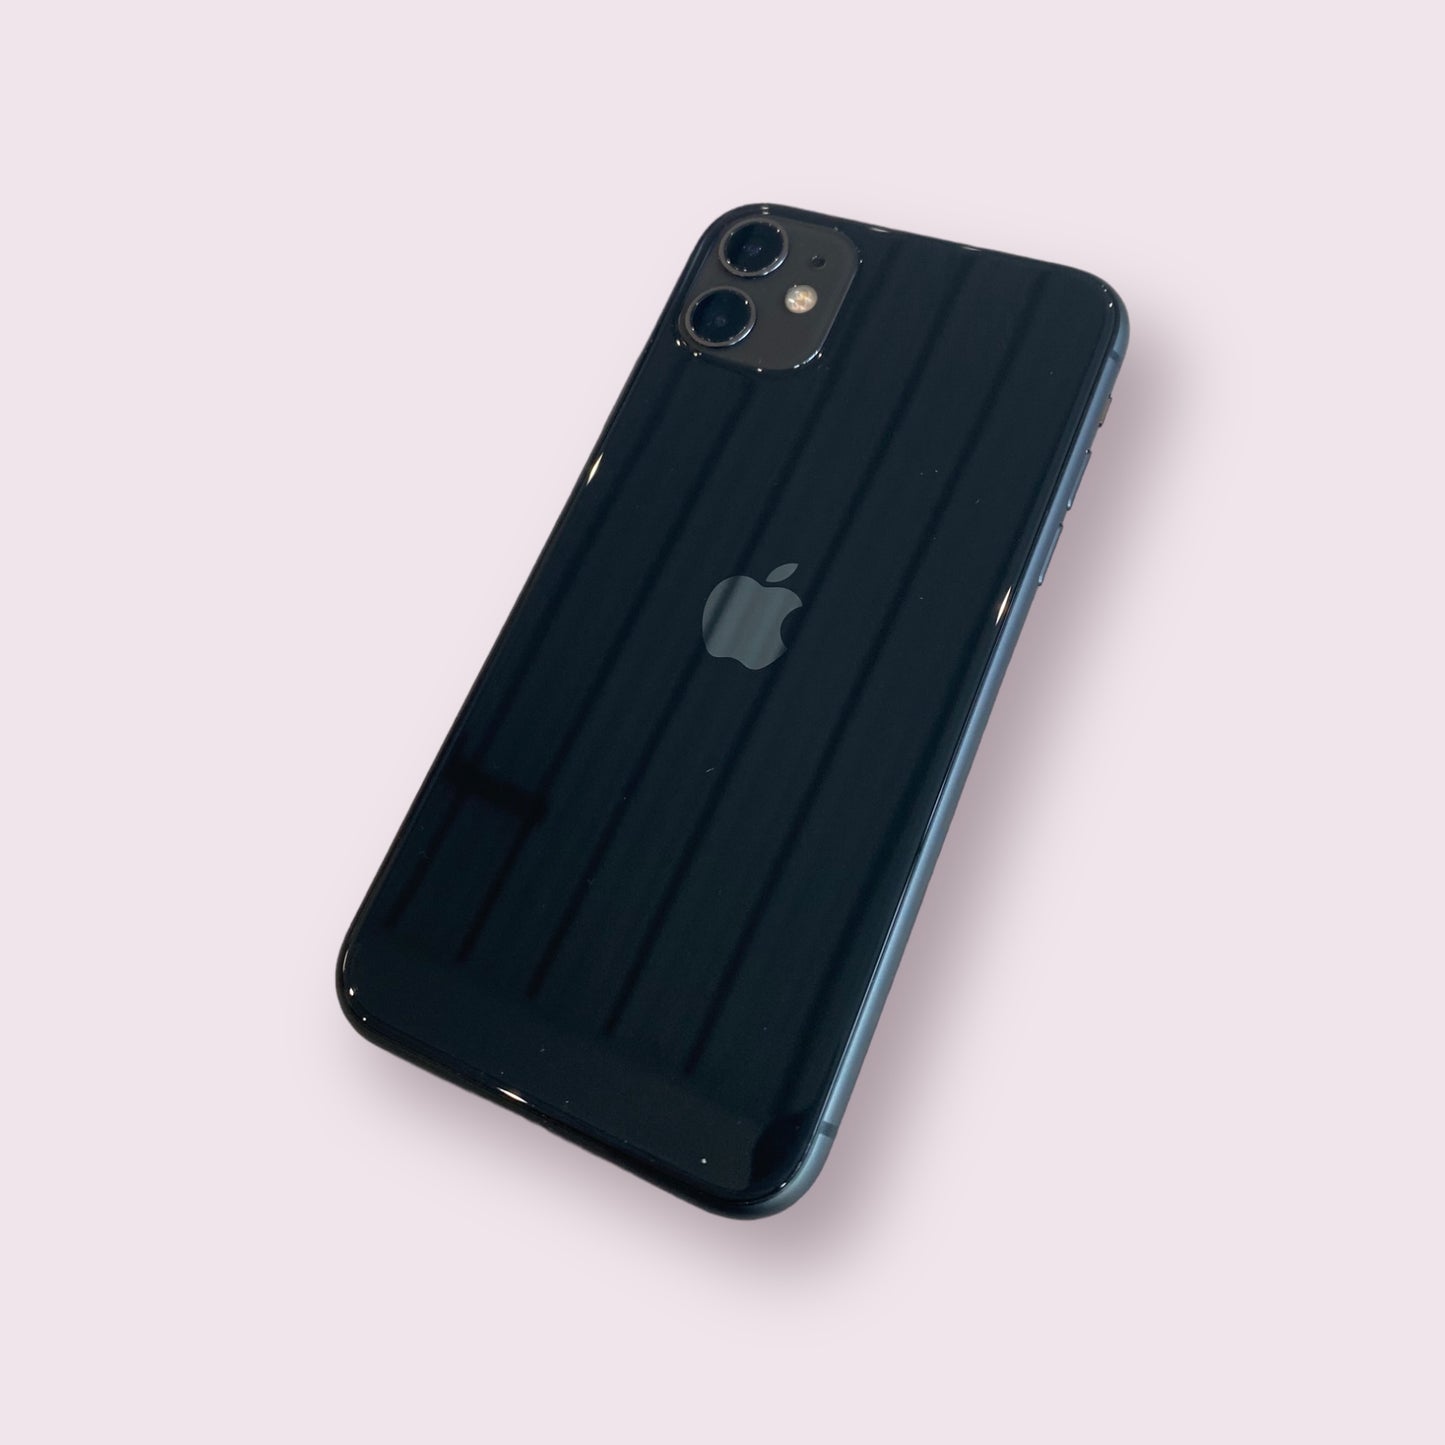 Apple iPhone 11 64GB Black - Unlocked - Grade A